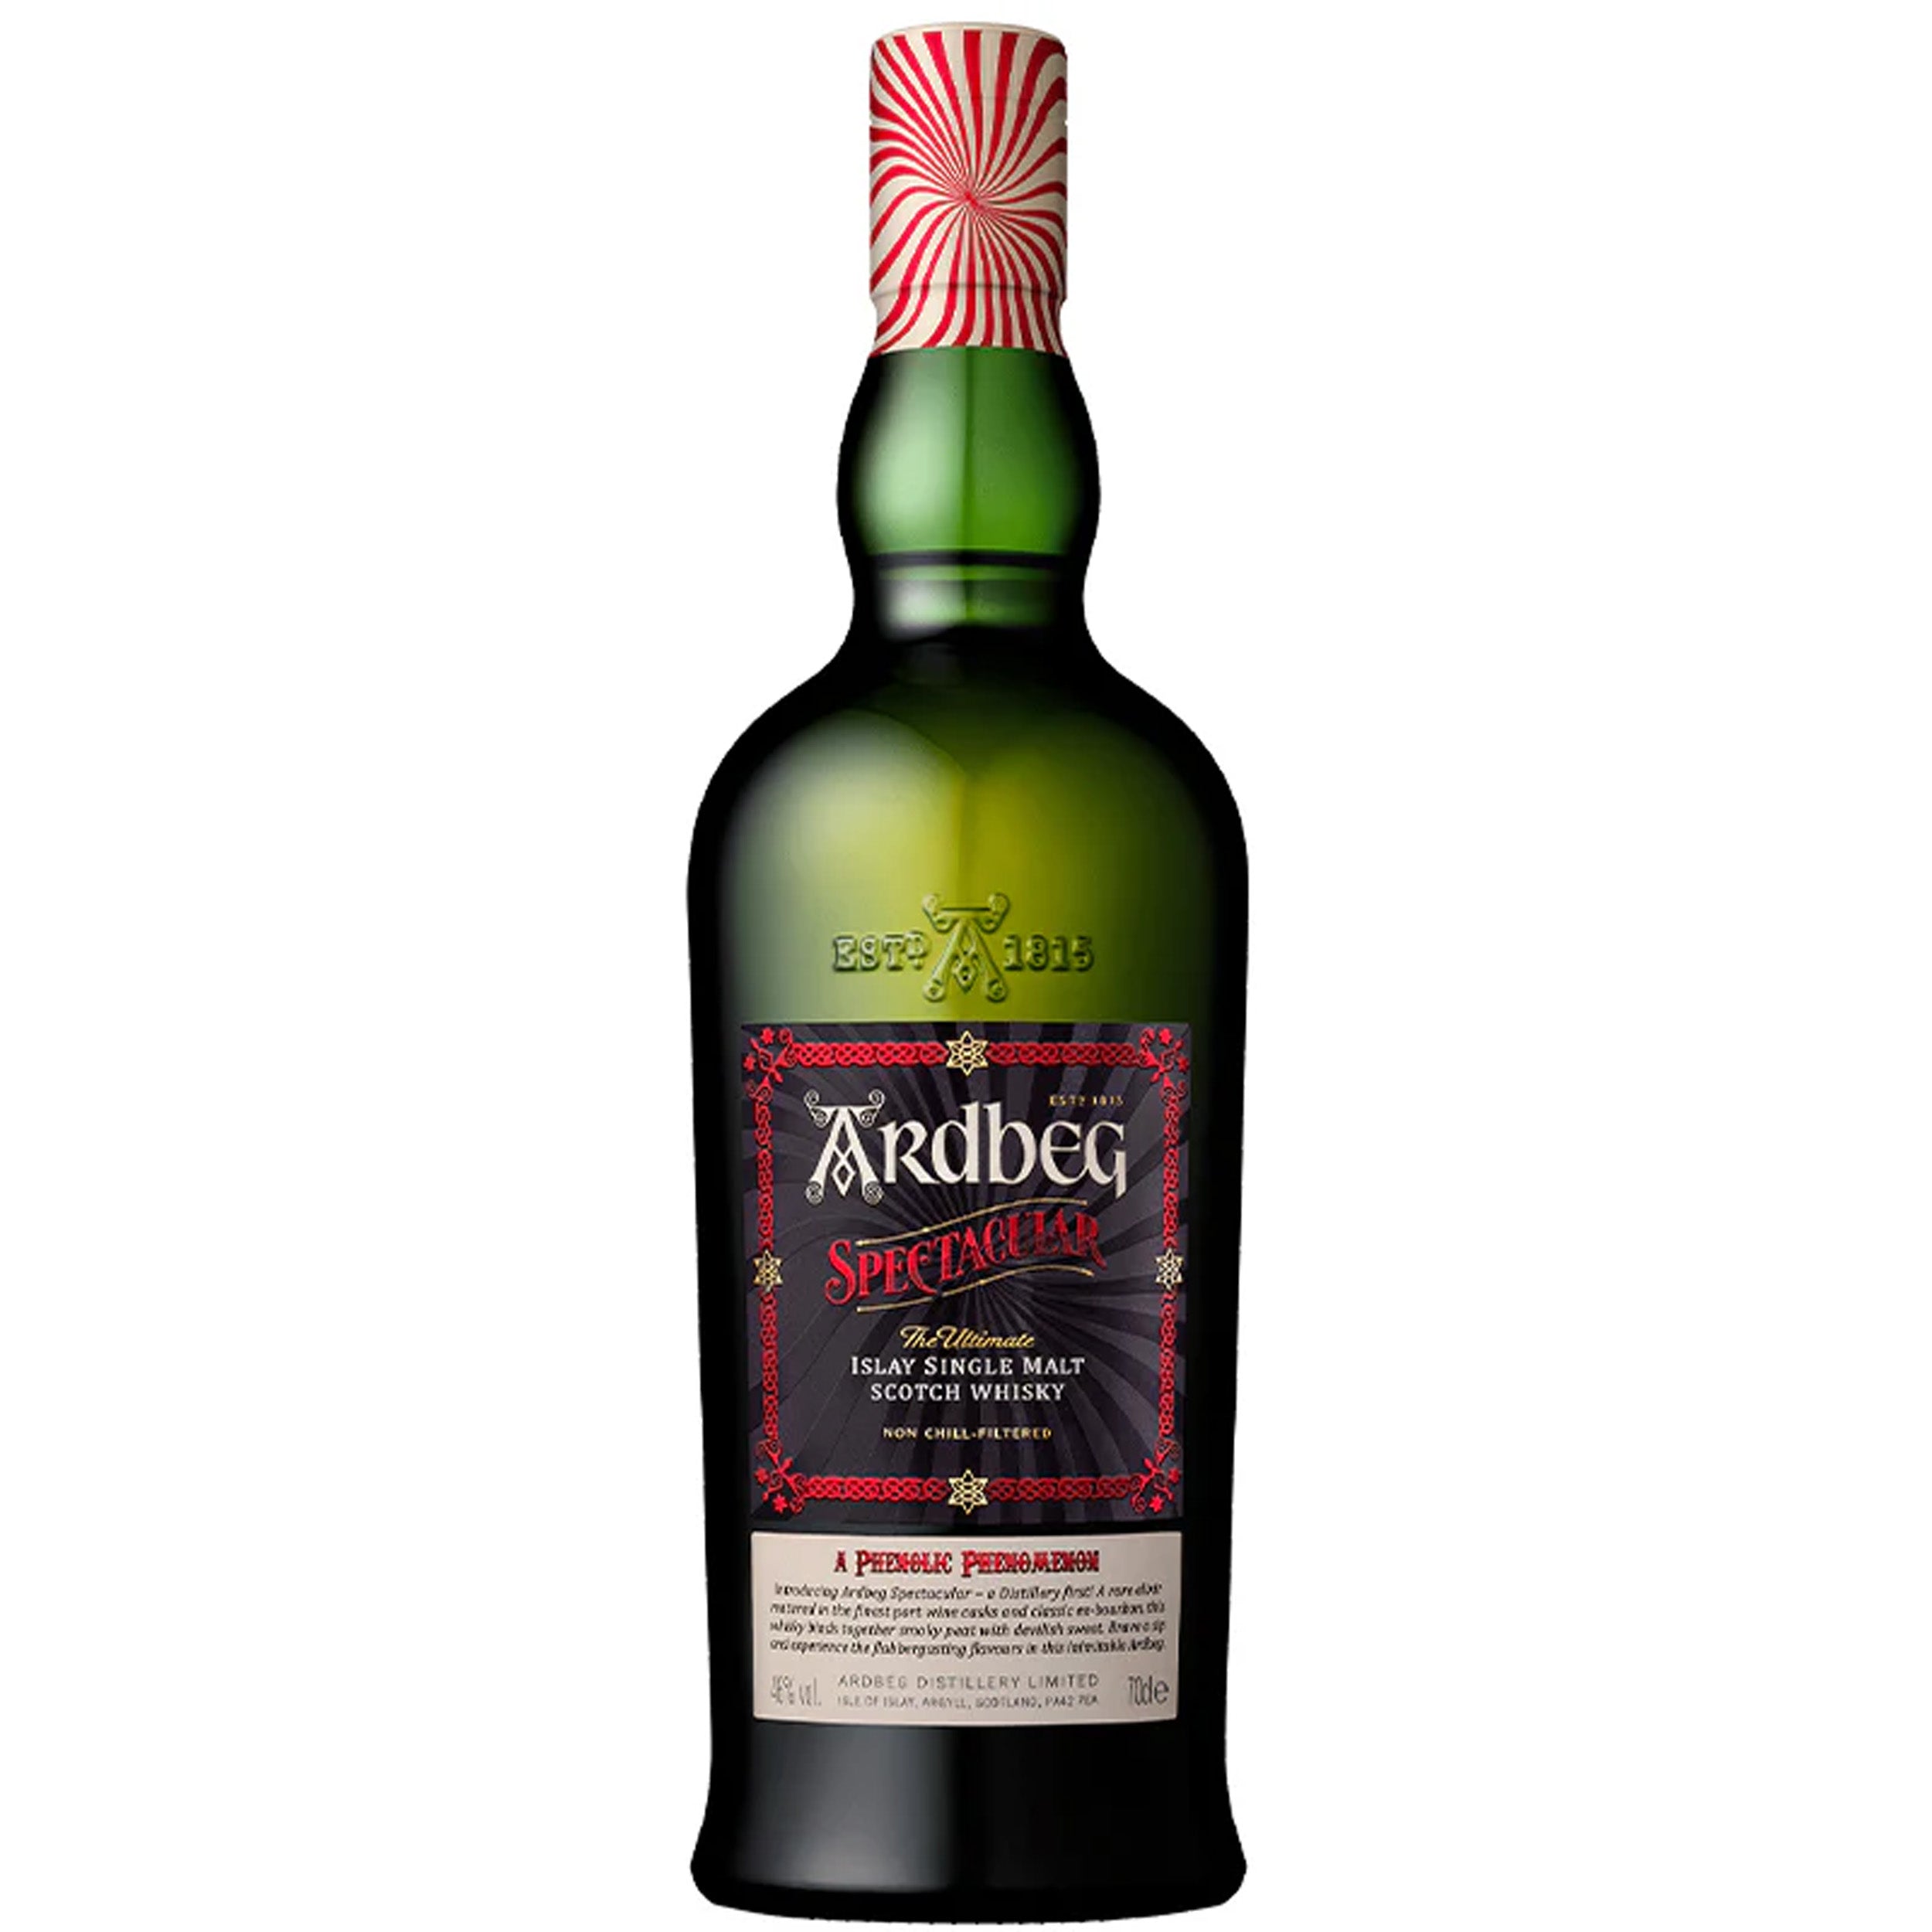 Ardbeg Spectacular Limited Edition Scotch Whisky